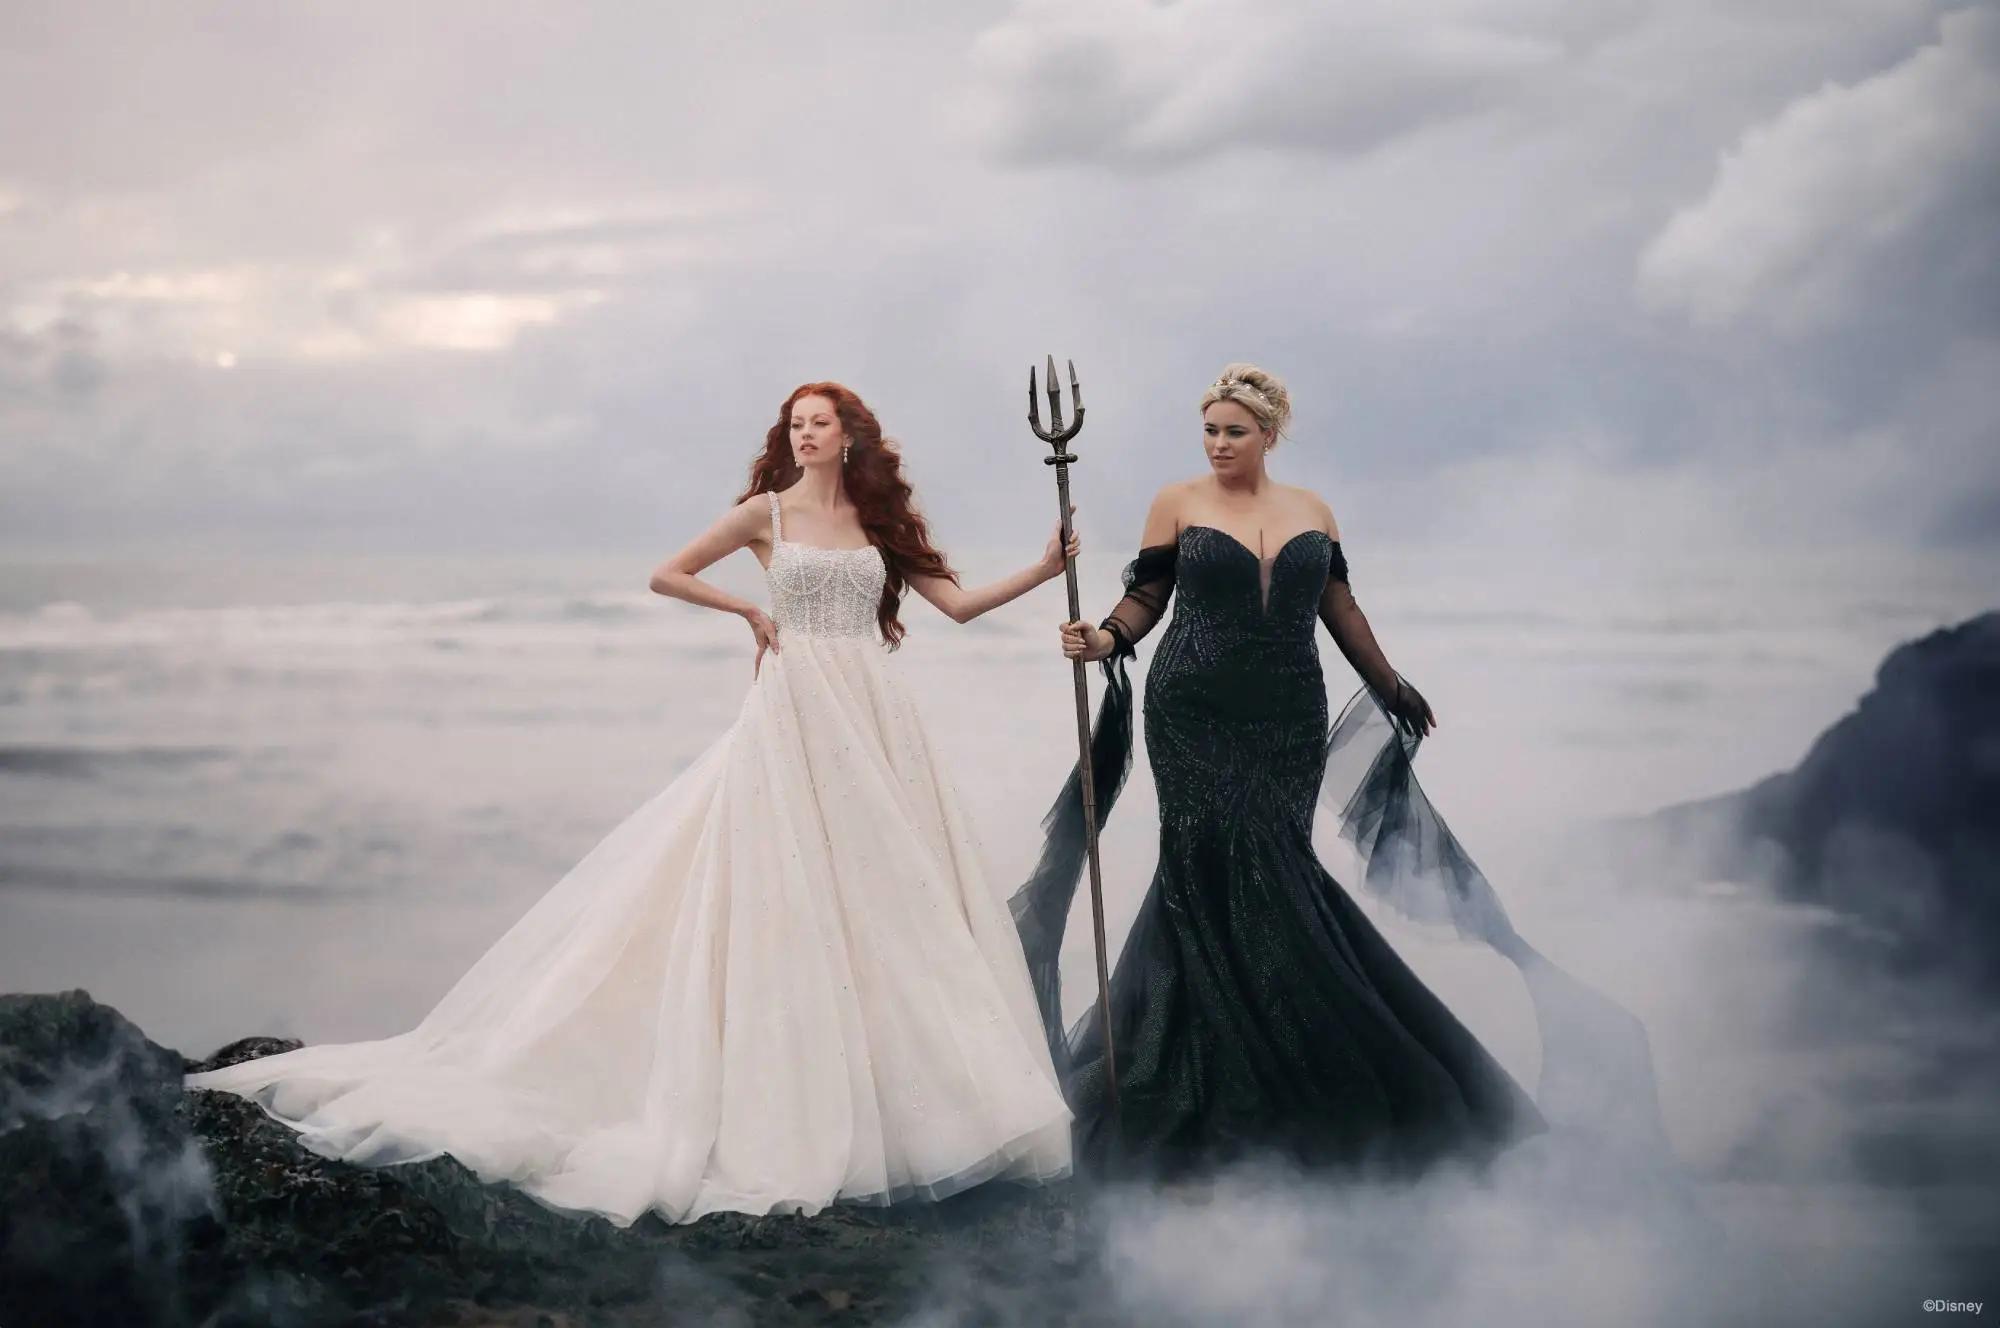 Models wearing Disney Allure Wedding Dress and Disney Villain wedding dress